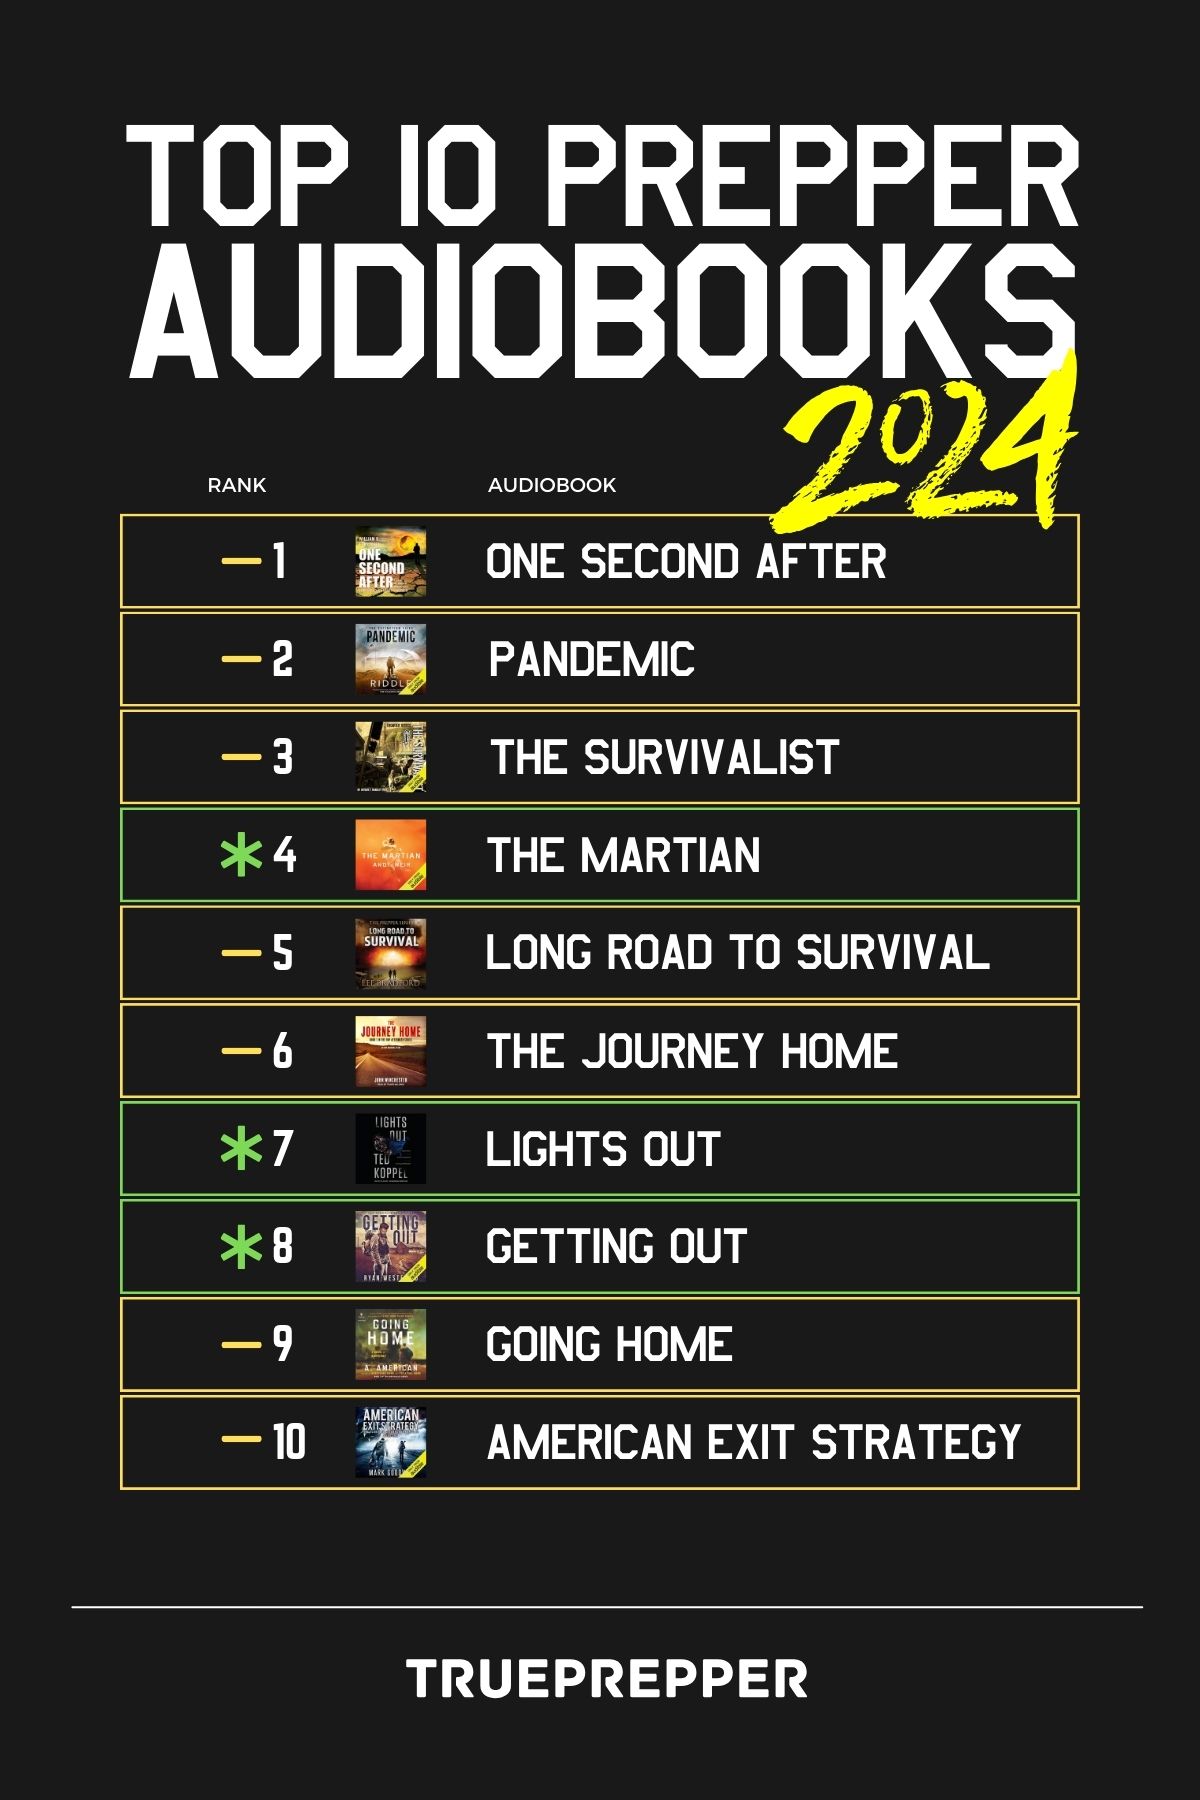 Top 10 Prepper Audiobooks